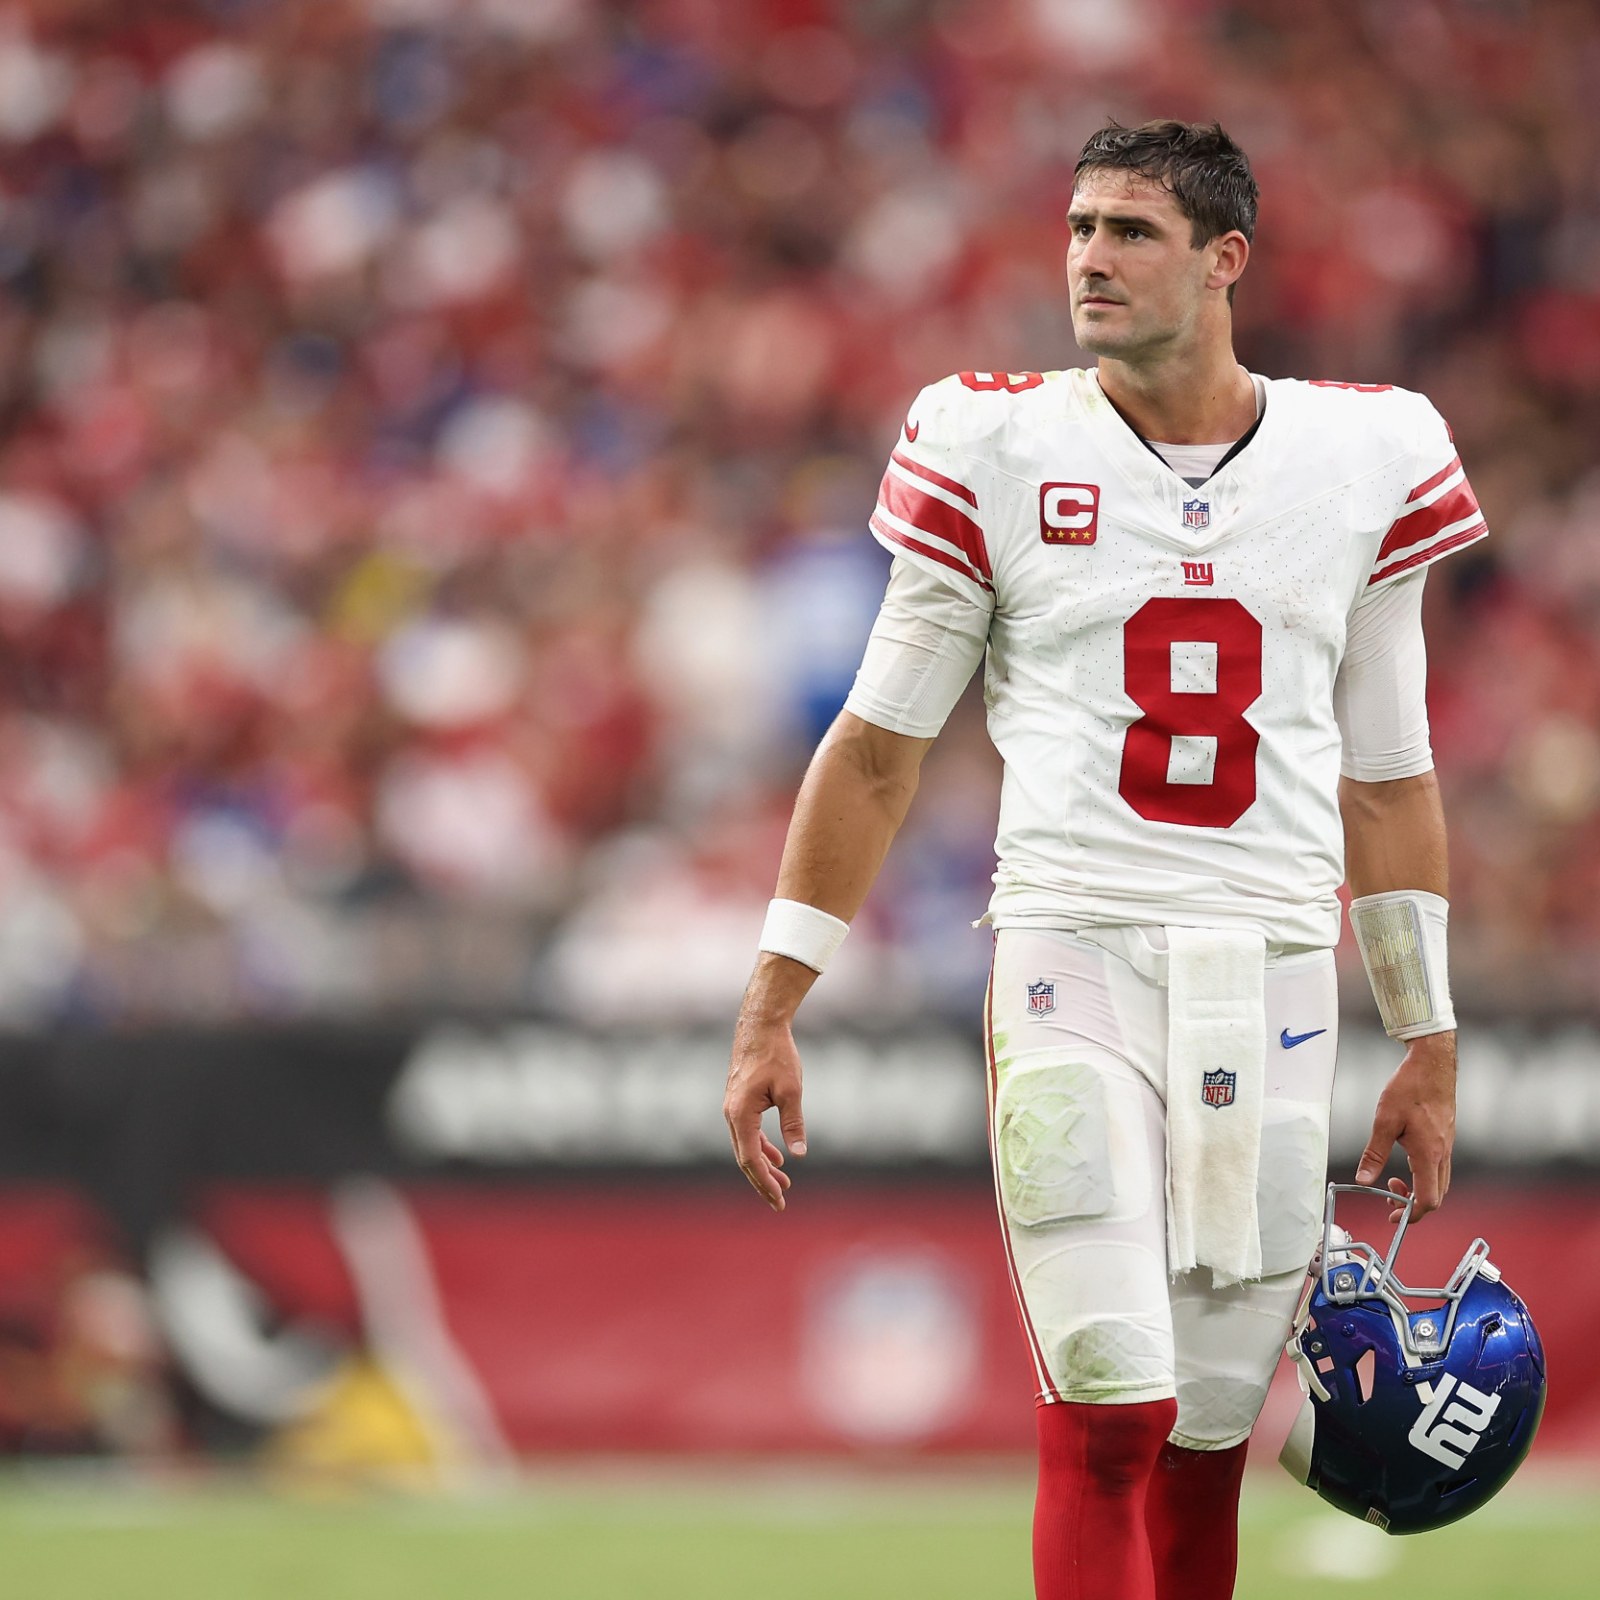 Daniel Jones Neck Injury: What We Know About Giants Quarterback's Status